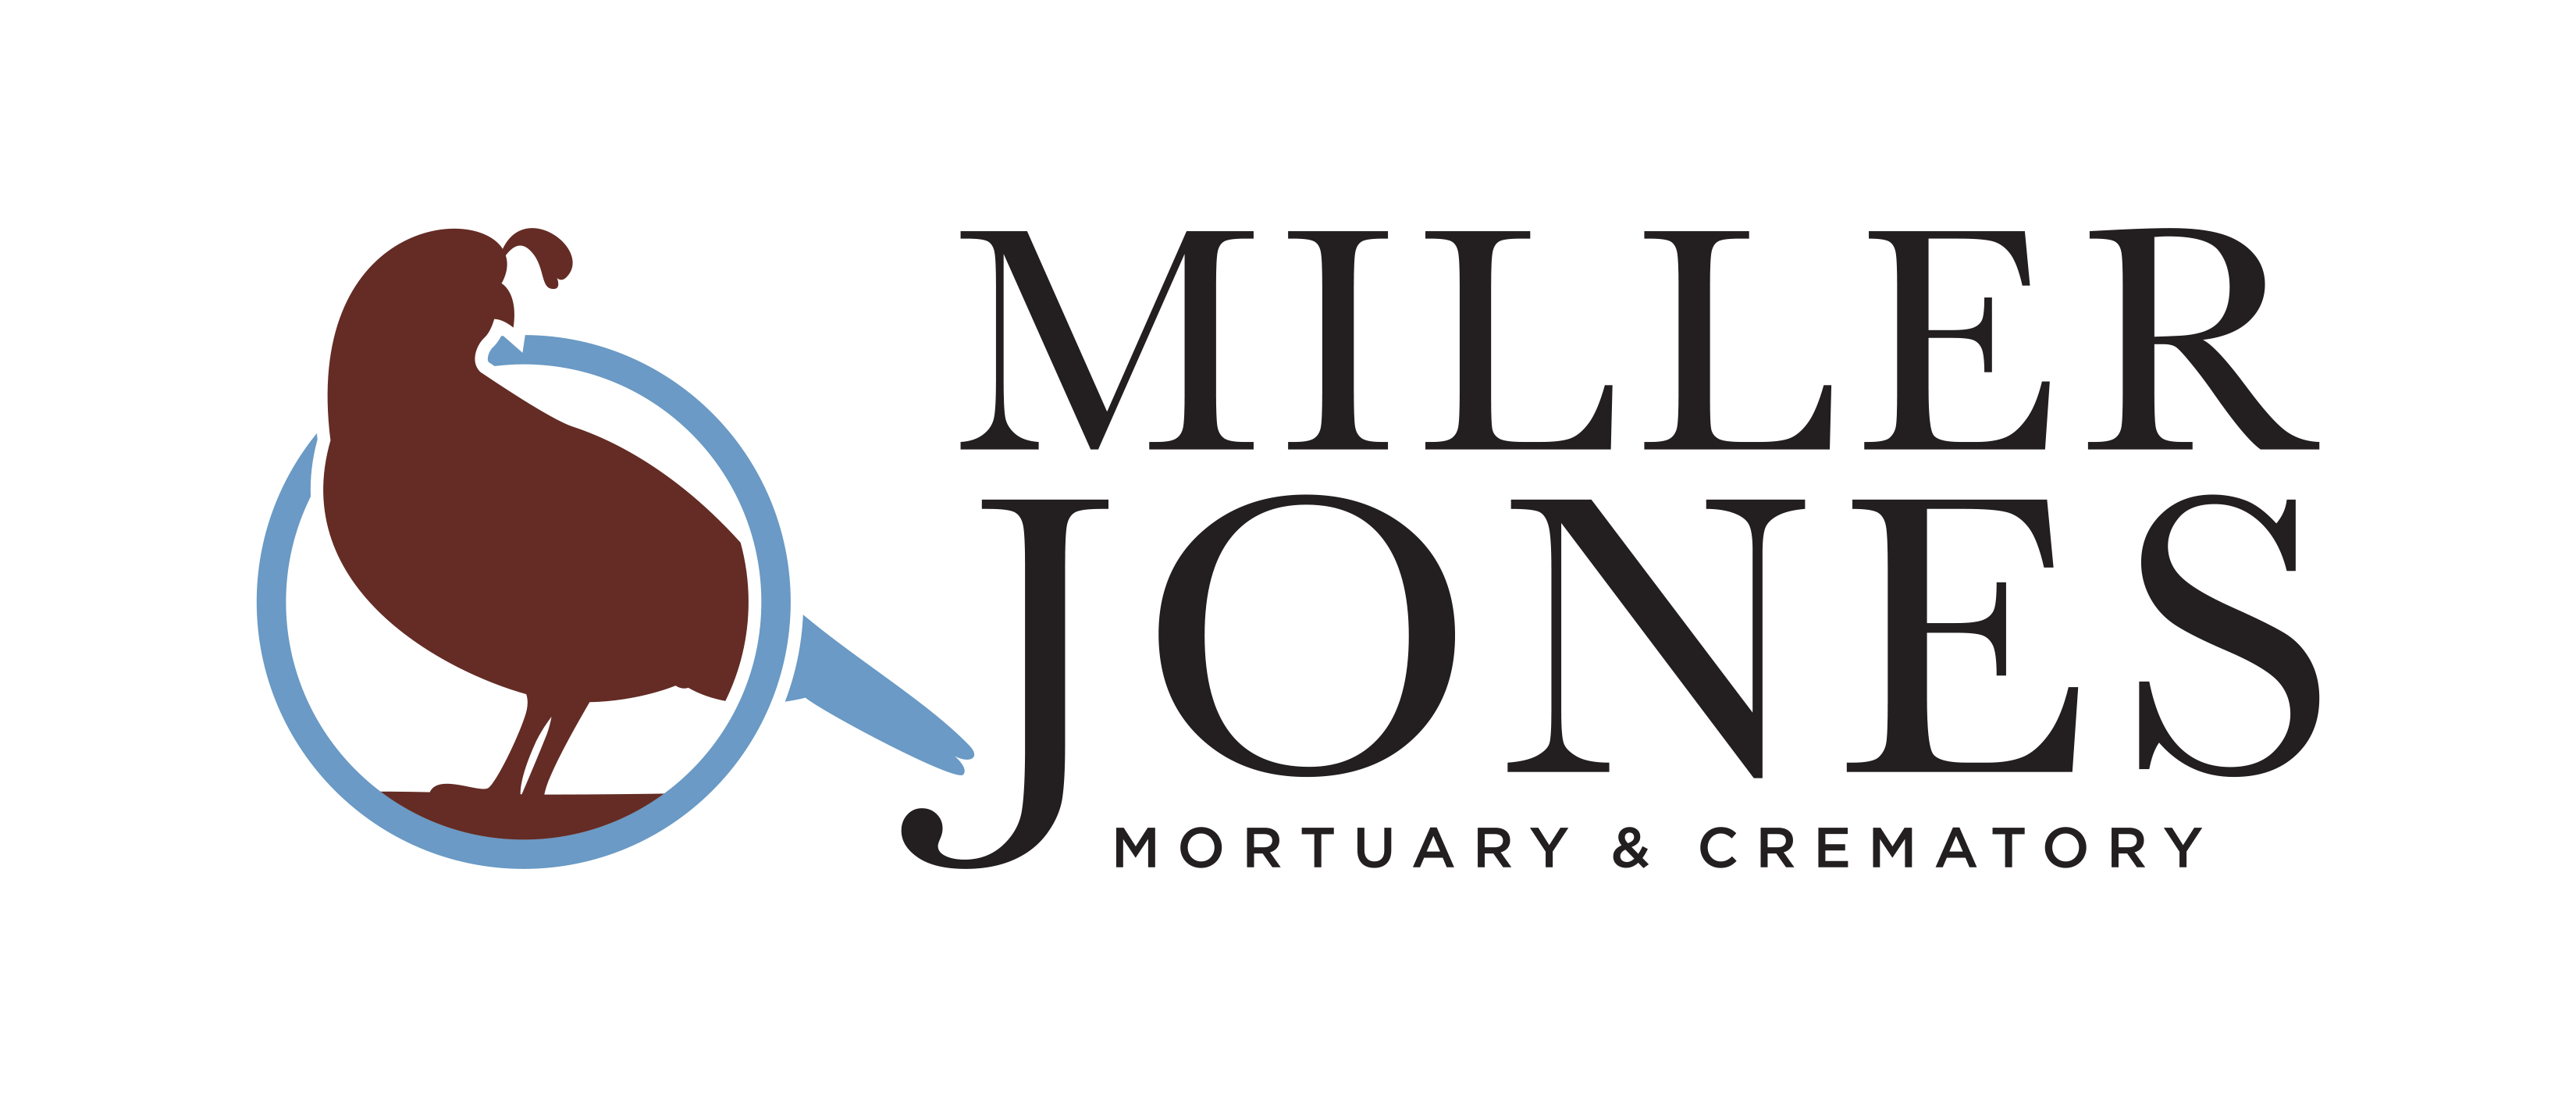 Miller-Jones Mortuary and Crematory, Inc. logo